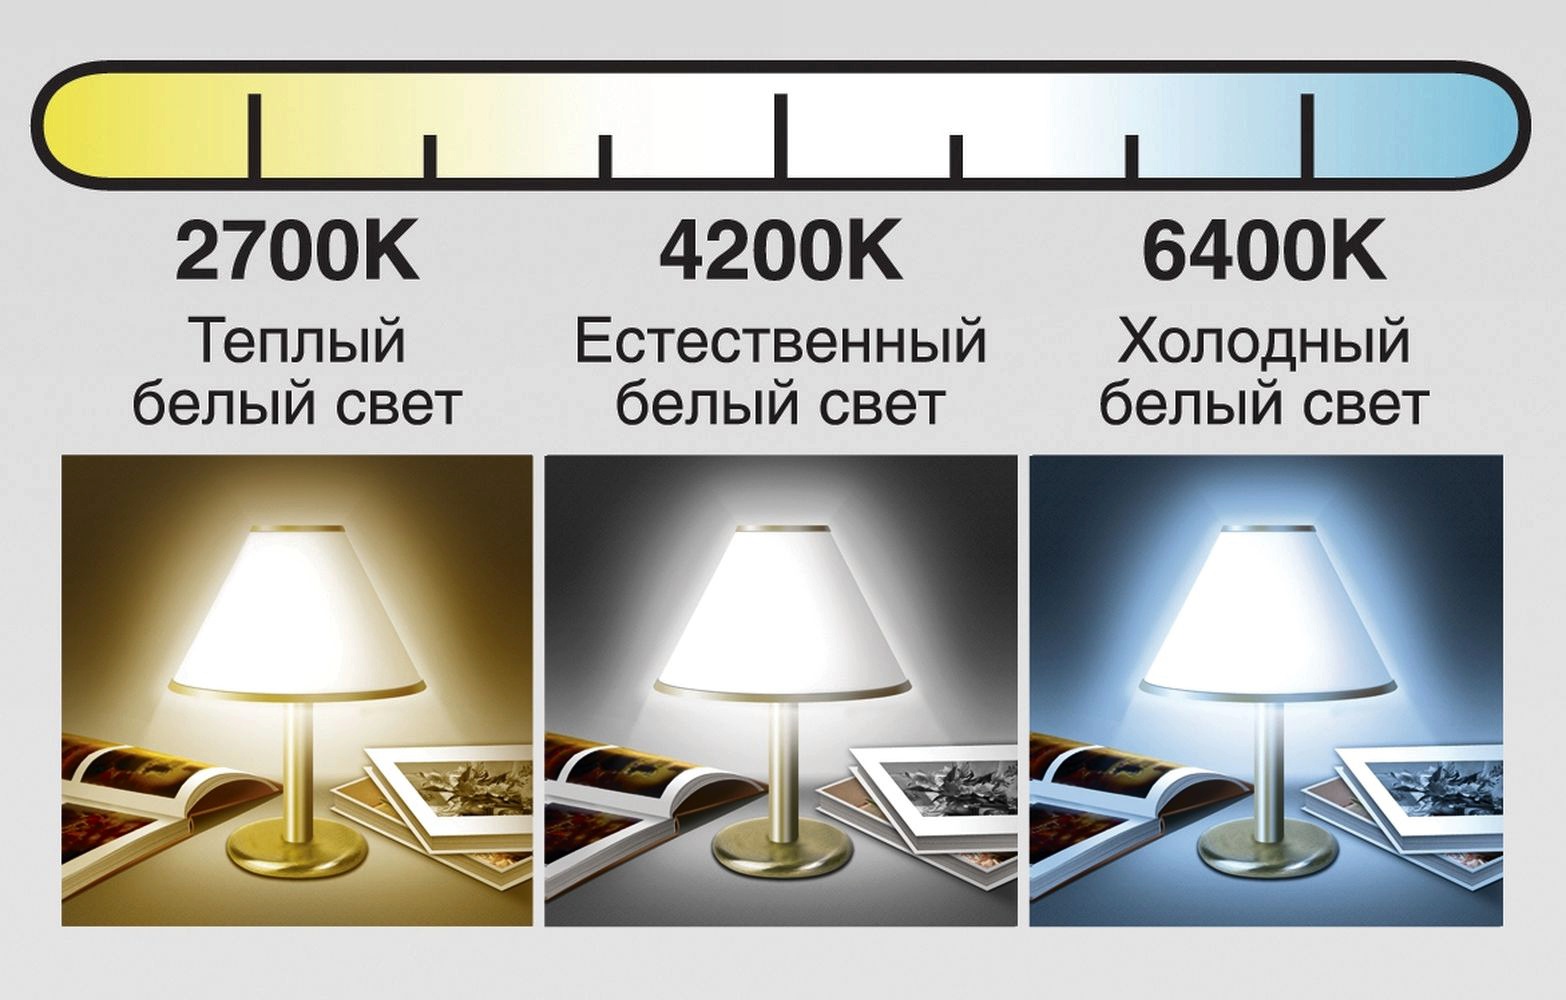 Типы света светодиодных ламп. Лампа на 4200 Кельвин. Цветовая температура светодиодных ламп. Теплый белый свет 2700к. Цветовая температура 4200.